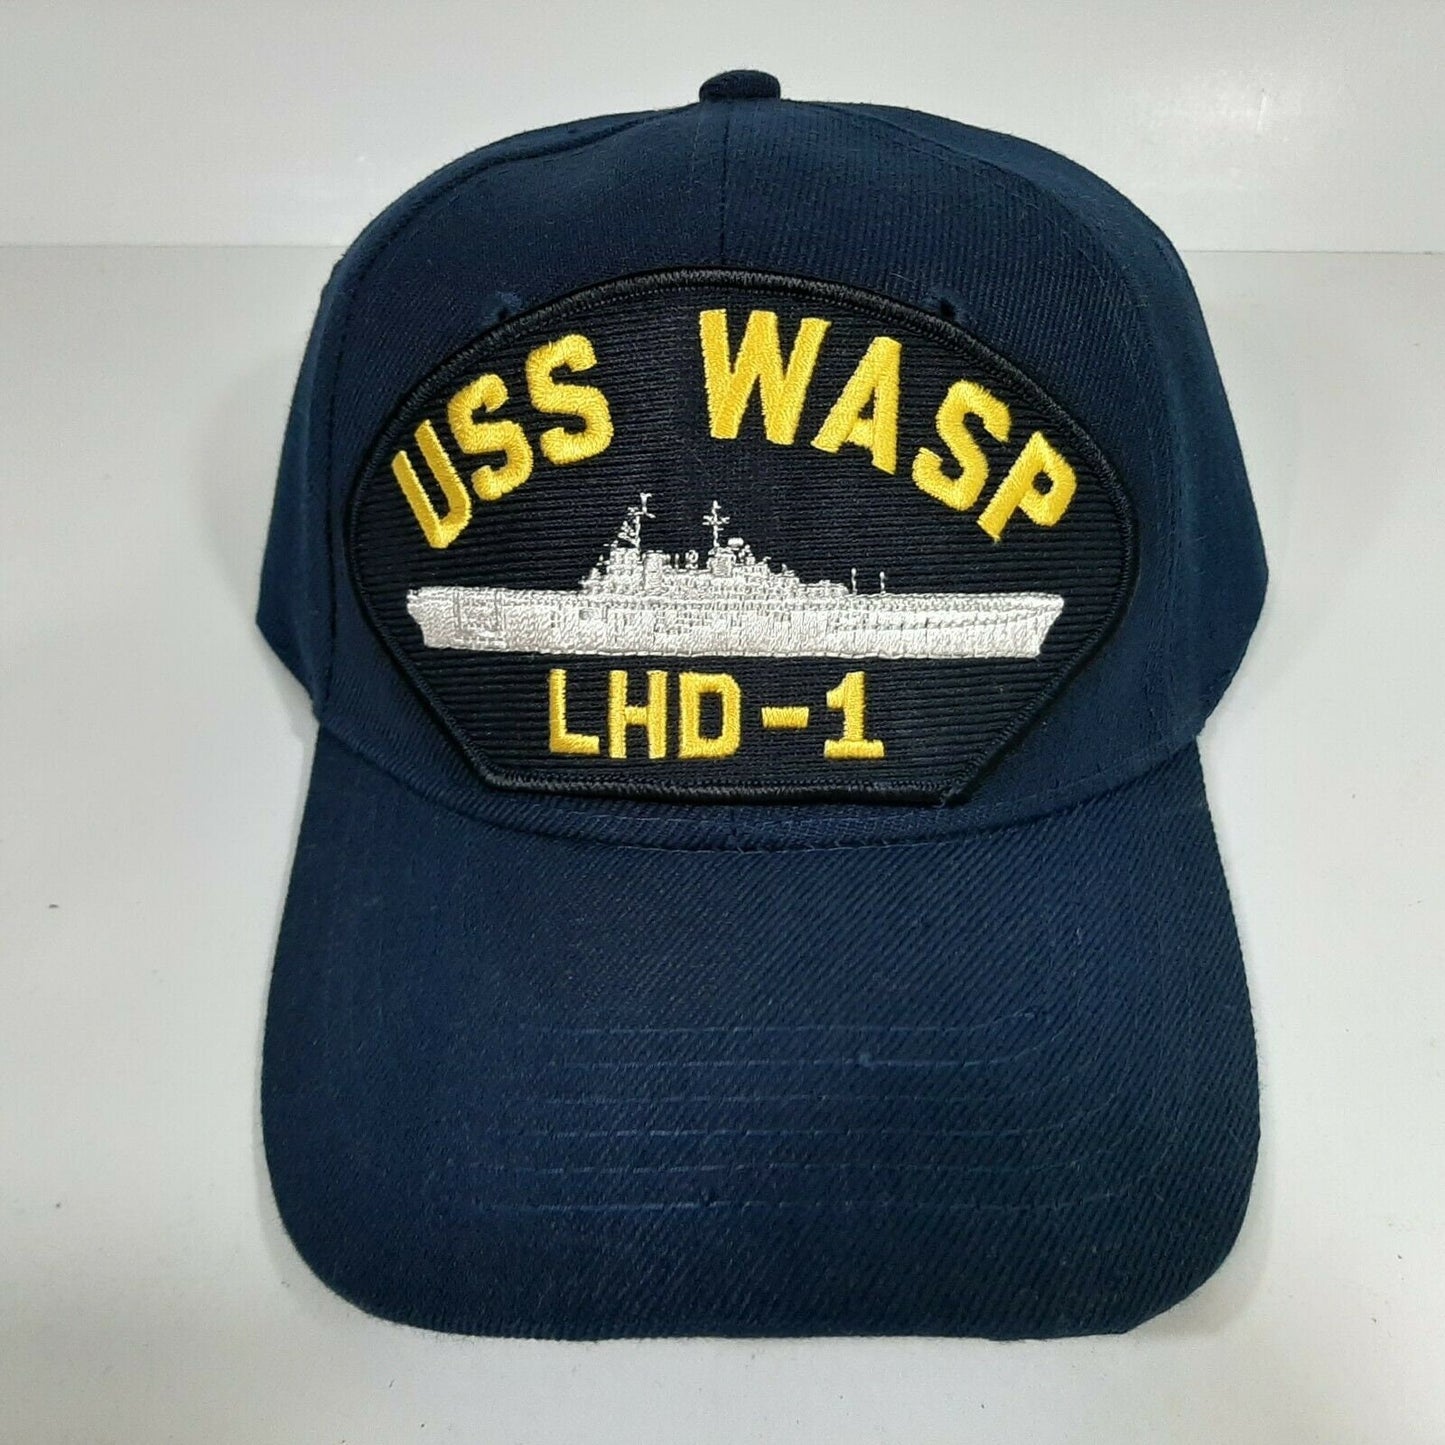 U.S. Navy USS Wasp LHD-1 Men's Hat Patch Cap Navy Blue Acrylic